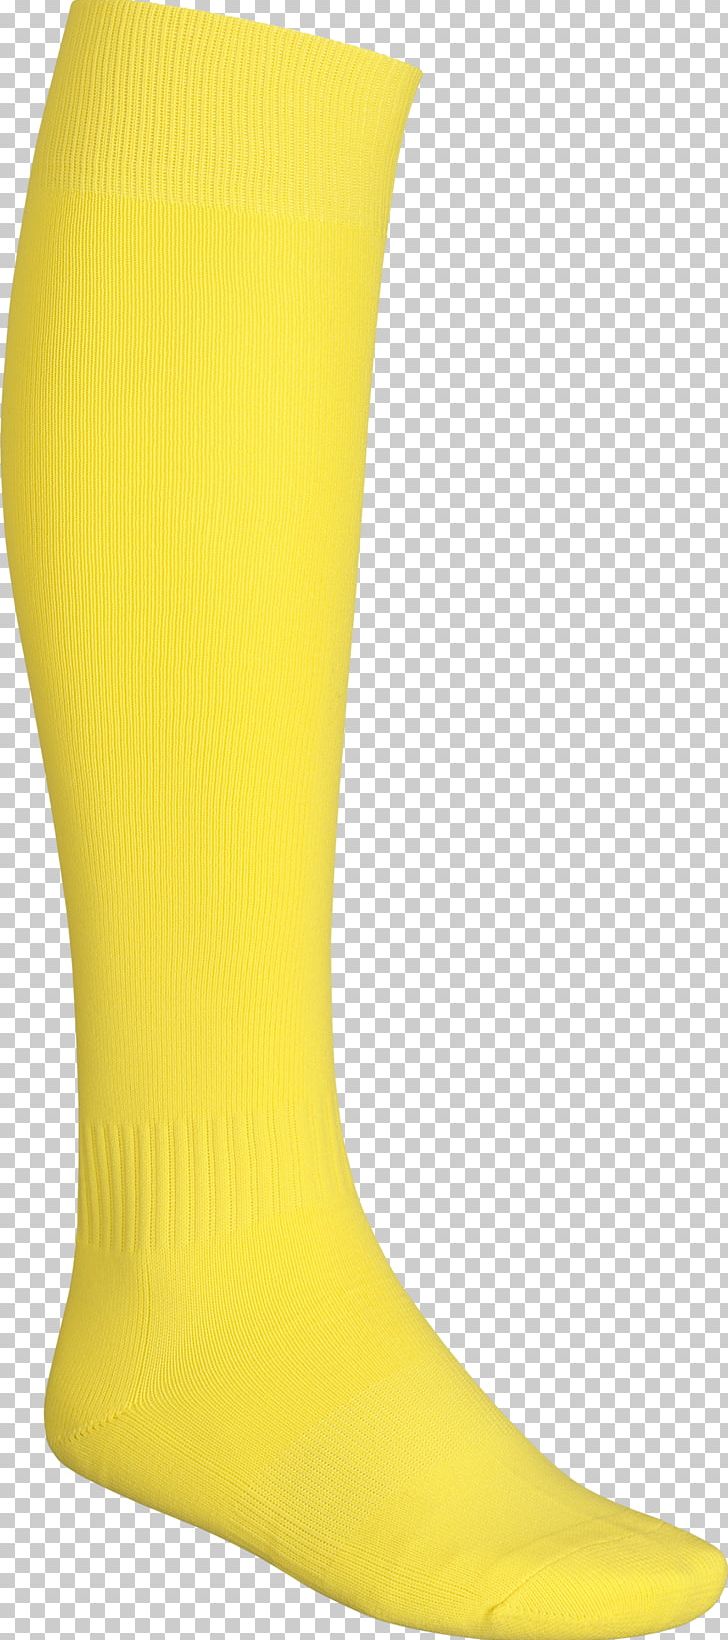 Sports Shoes Yellow Sock PNG, Clipart, Derbystar, Football, Human Leg, Industrial Design, Pelipaita Free PNG Download